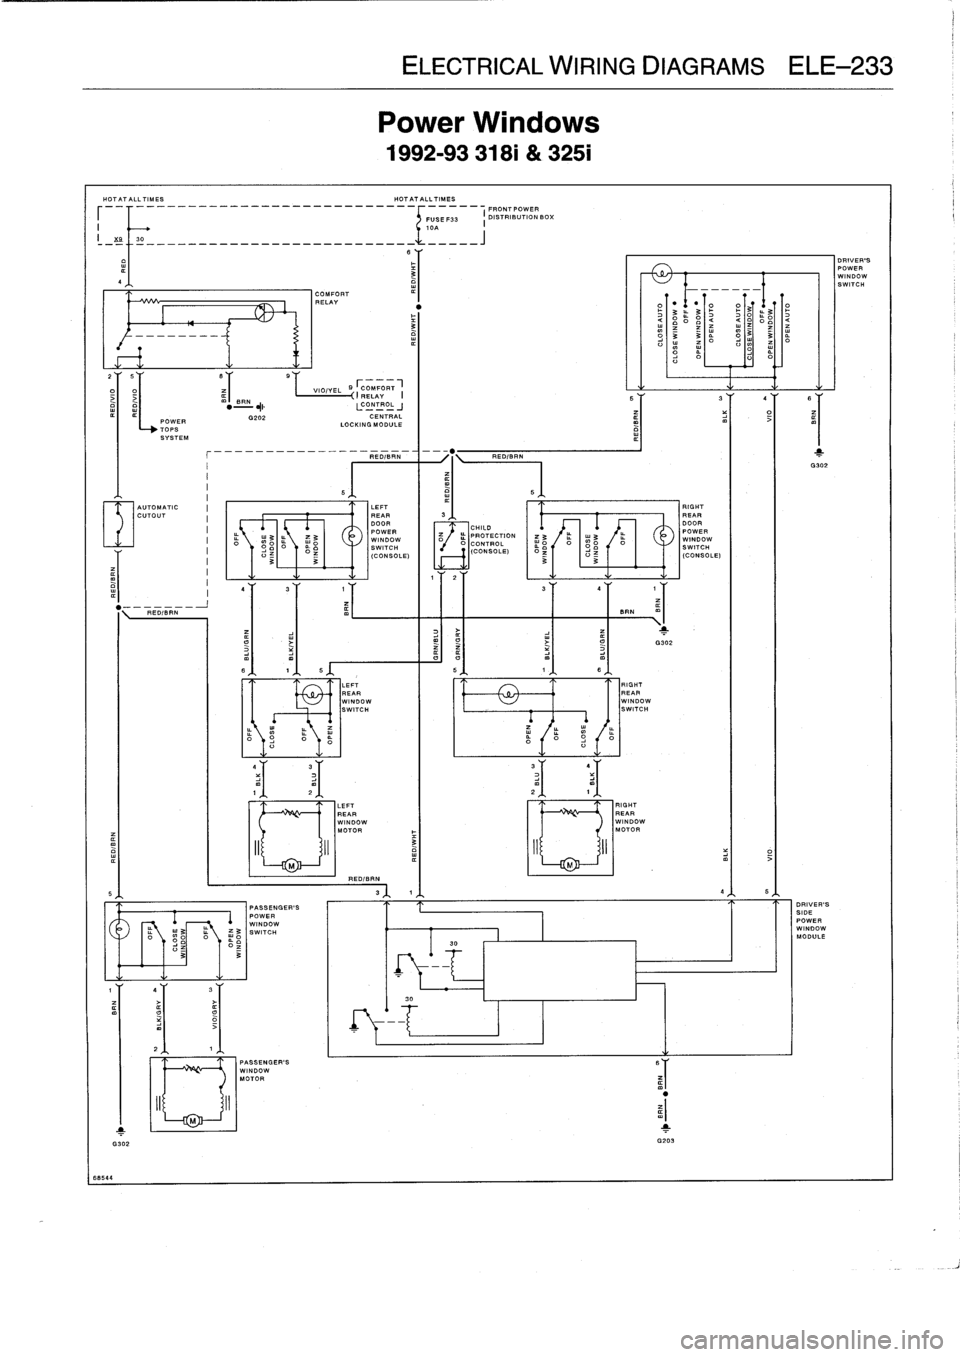 BMW M3 1993 E36 Workshop Manual 
HO7A7AlL71ME5

	

HOTATALLTIMES

r
--

68544

i

*---AAA
POWER

AUTOMATIC
CUTOUT

O

PASSENGERS
WINDOWMOTOR

V
1
G3D2

B
r
COMFDRT~
VIOIYEL
(IRELAY
I

ELECTRICAL
WIRING
DIAGRAMS
ELE-233

Power
Windo